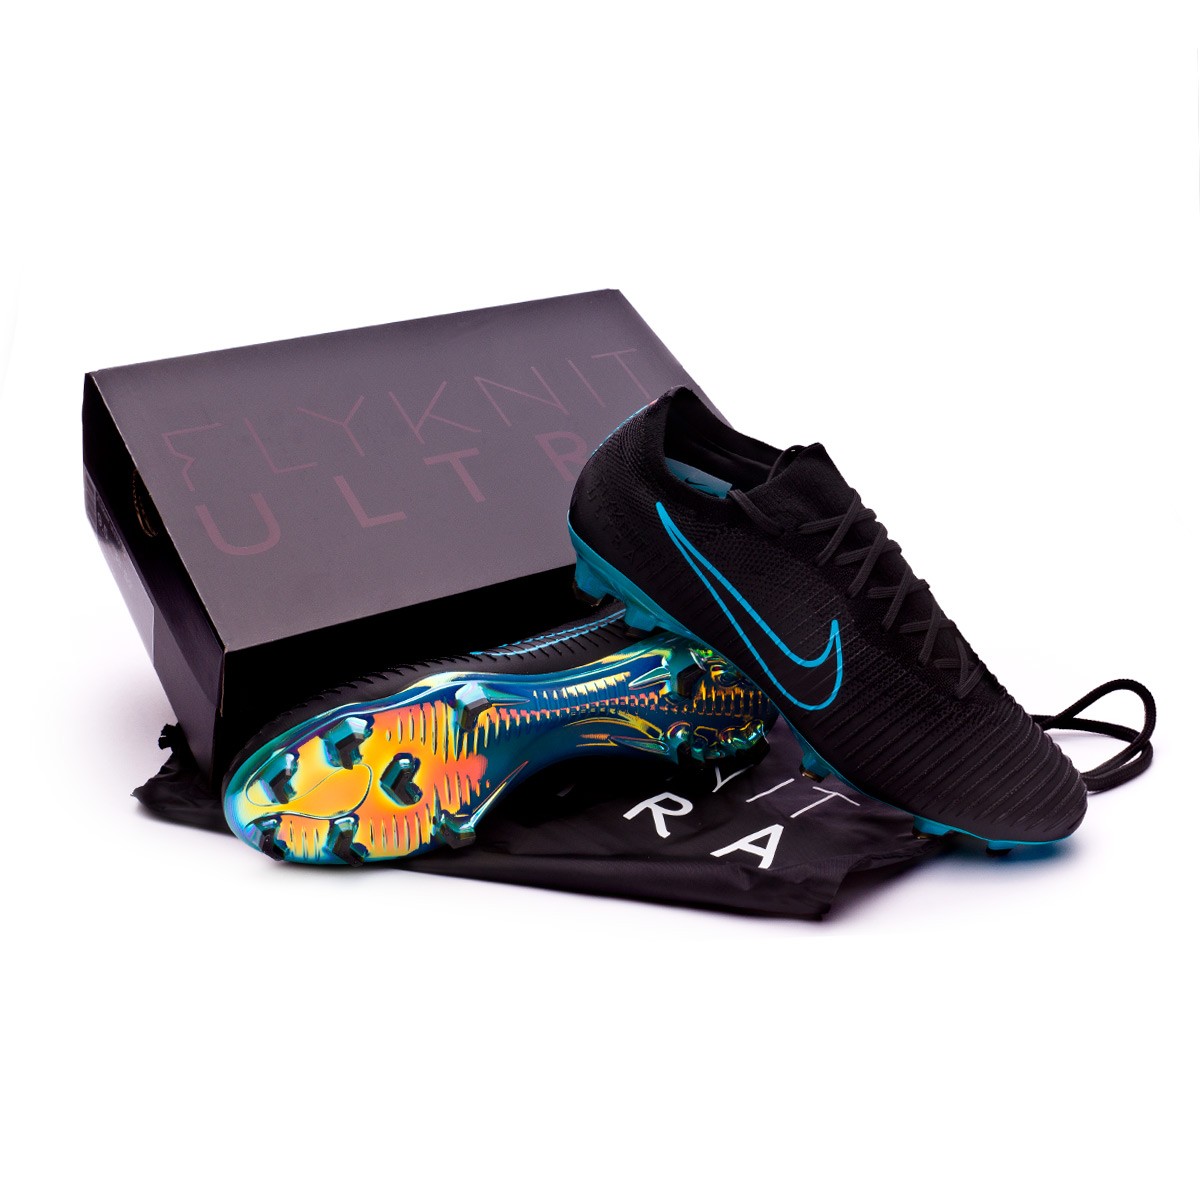 Football Boots Nike Mercurial Vapor Flyknit Ultra FG Black-Gamma blue -  Football store Fútbol Emotion